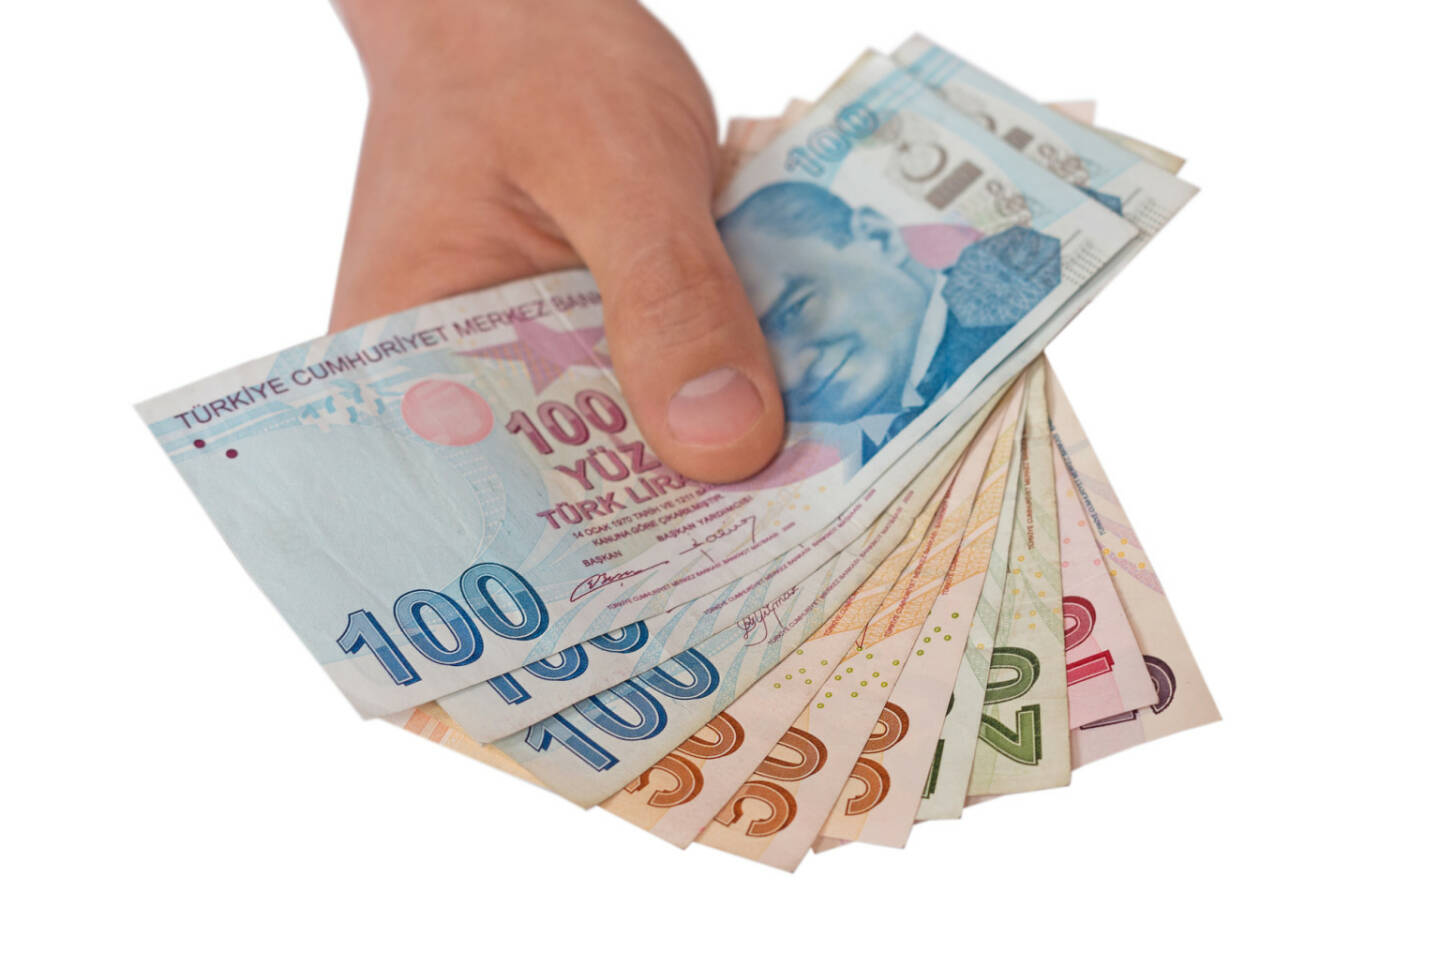 Türkische Lira - https://de.depositphotos.com/179619028/stock-photo-hand-holding-turkish-lira-currency.html